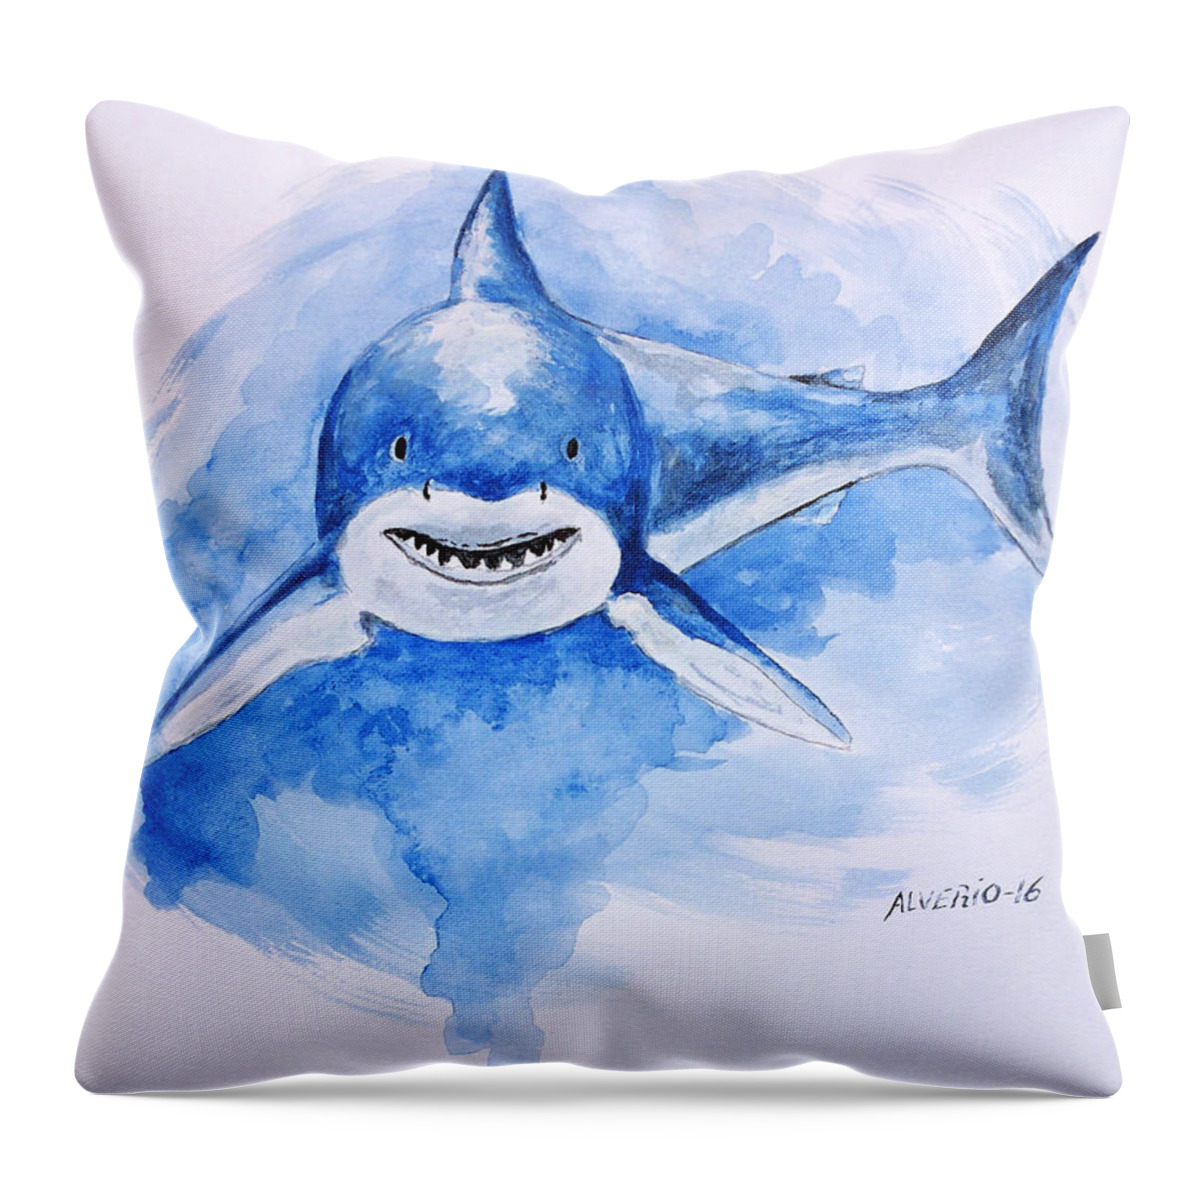 Shark Throw Pillow featuring the painting Shark by Edwin Alverio